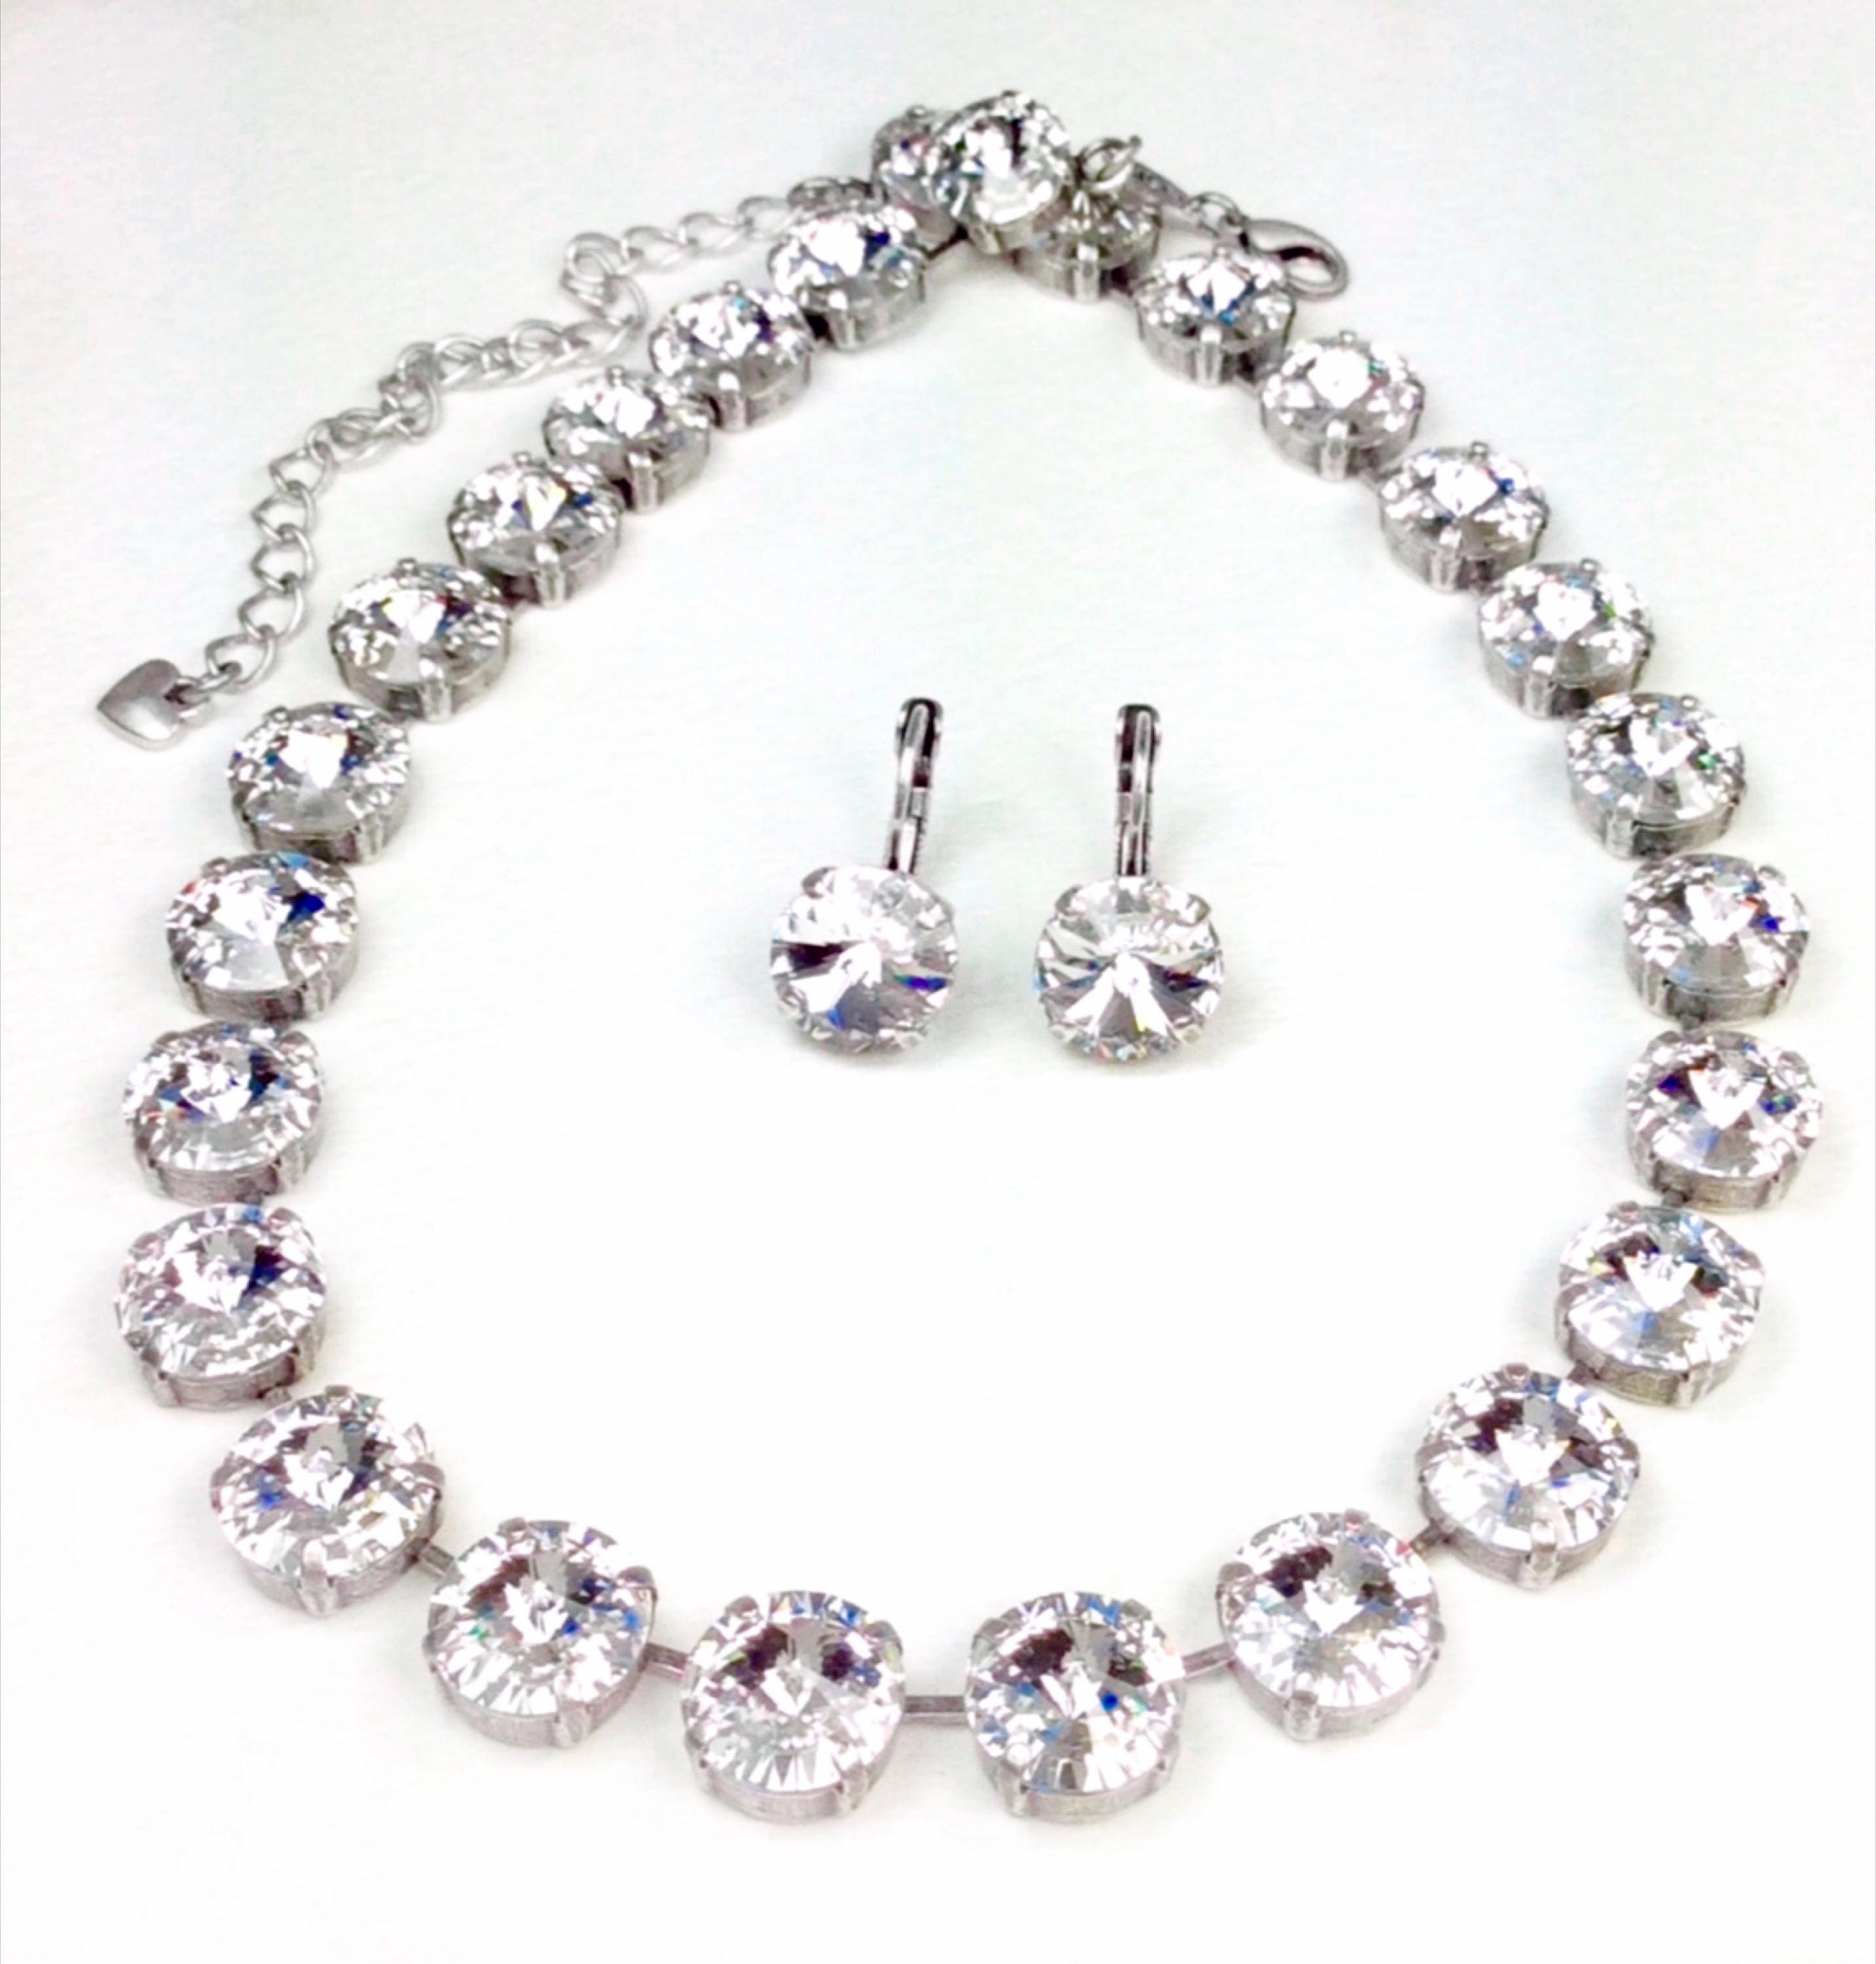 Swarovski Crystal 12MM 3 Piece Set - Necklace, Bracelet & Earring - Designer Inspired - ANY Swarovski Color or Finish Listed - FREE SHIPPING